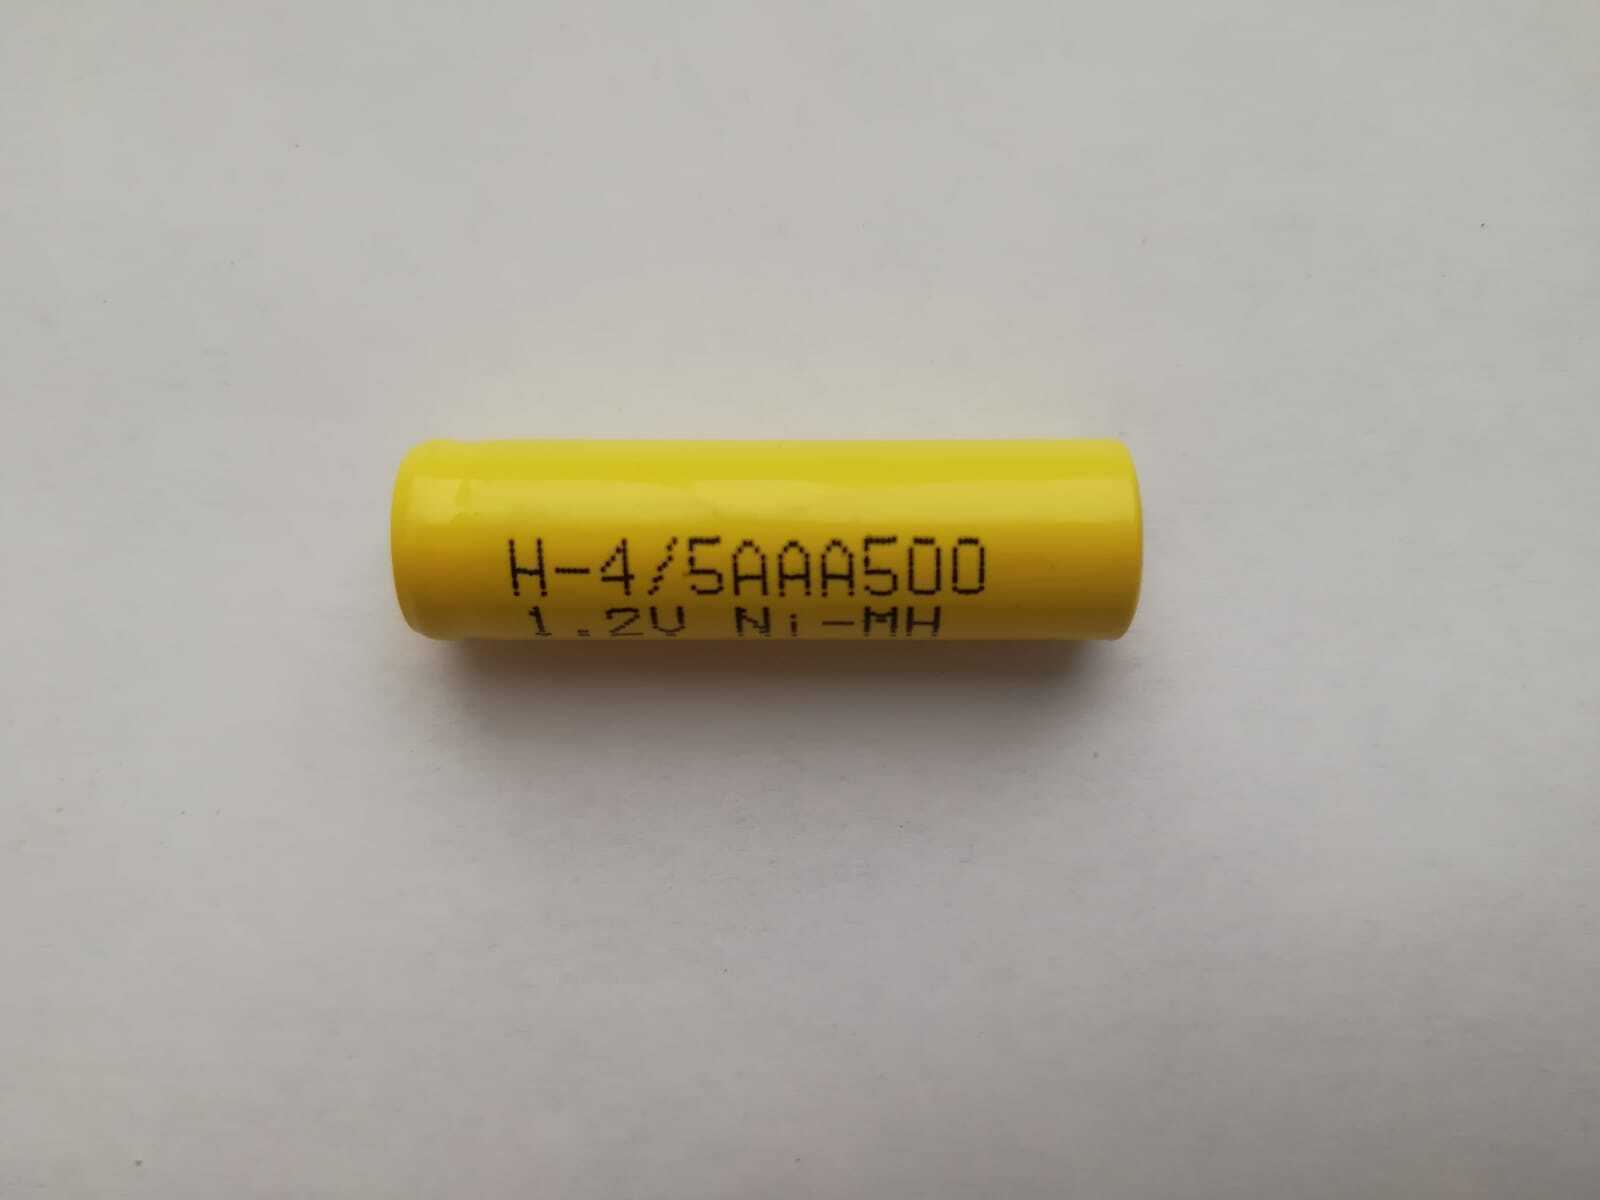 Battery h. Батарейка h4. Mak PRESTISH аккумулятор. H-4/5aaa500.